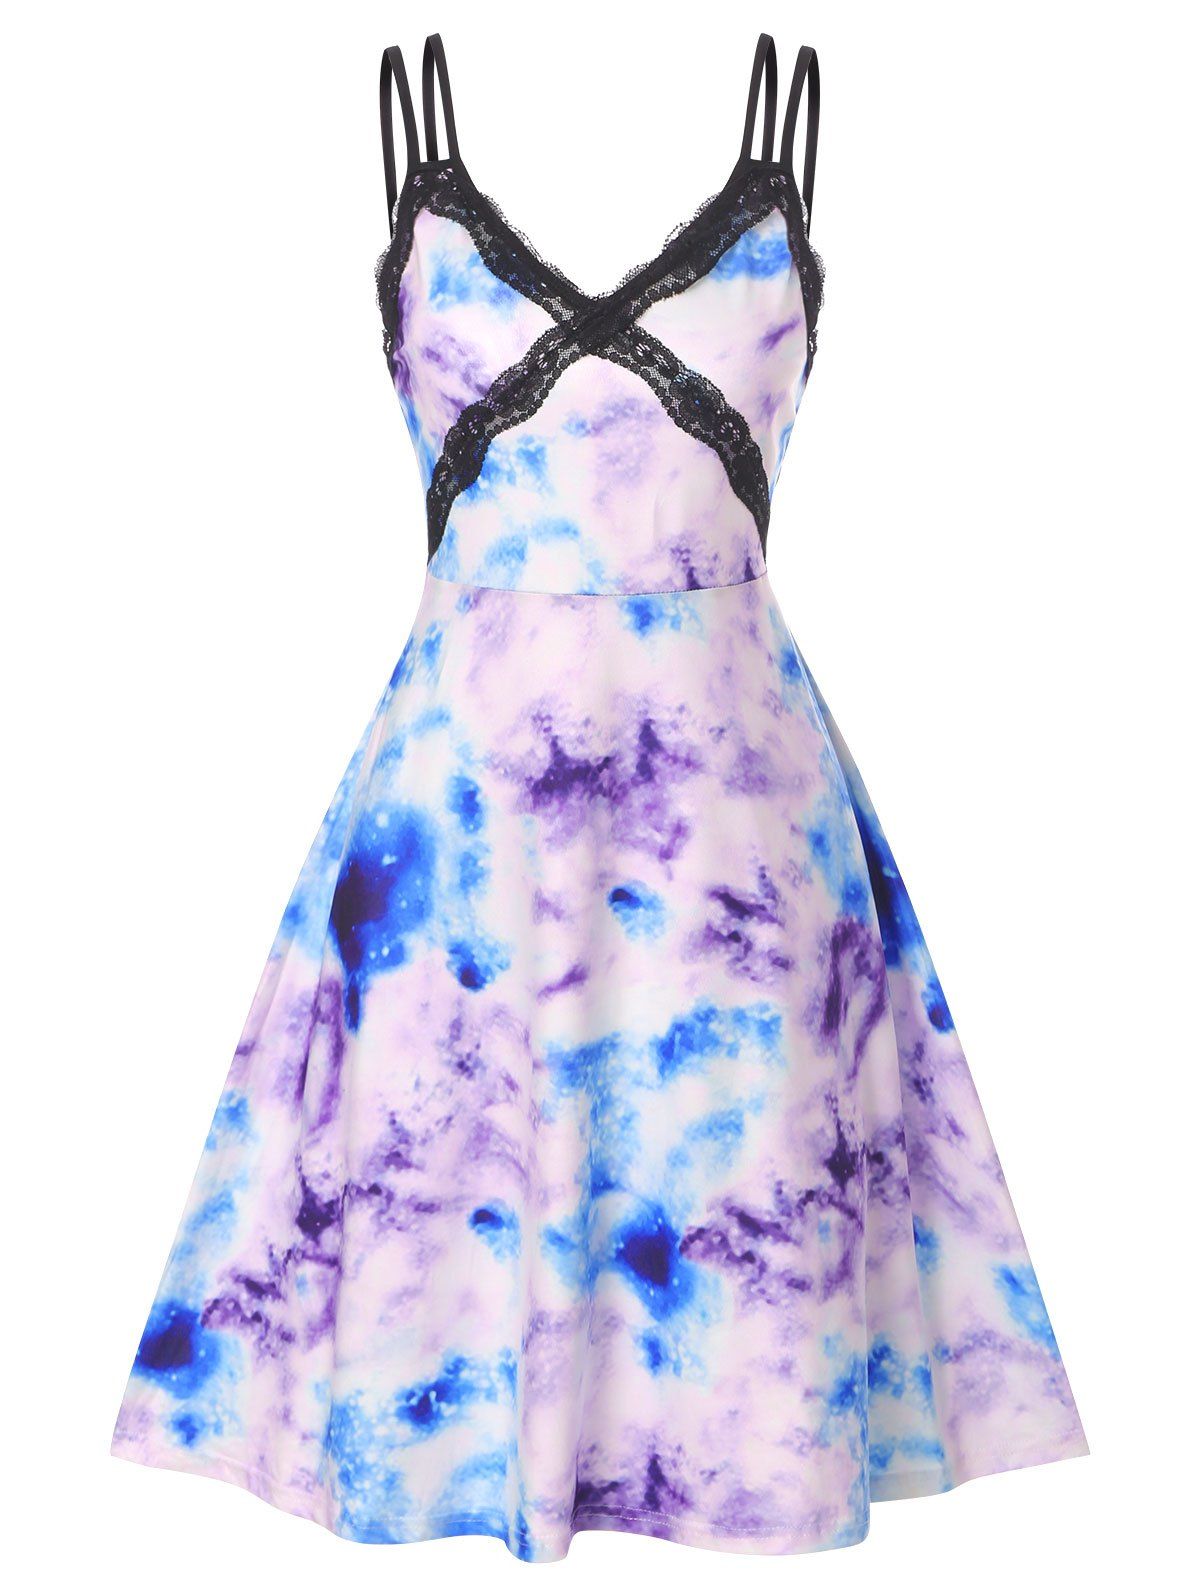 Dreamy Tie Dye Print A Line Dress Dual Straps Lace Insert V Neck Cami Dress - LIGHT PURPLE M